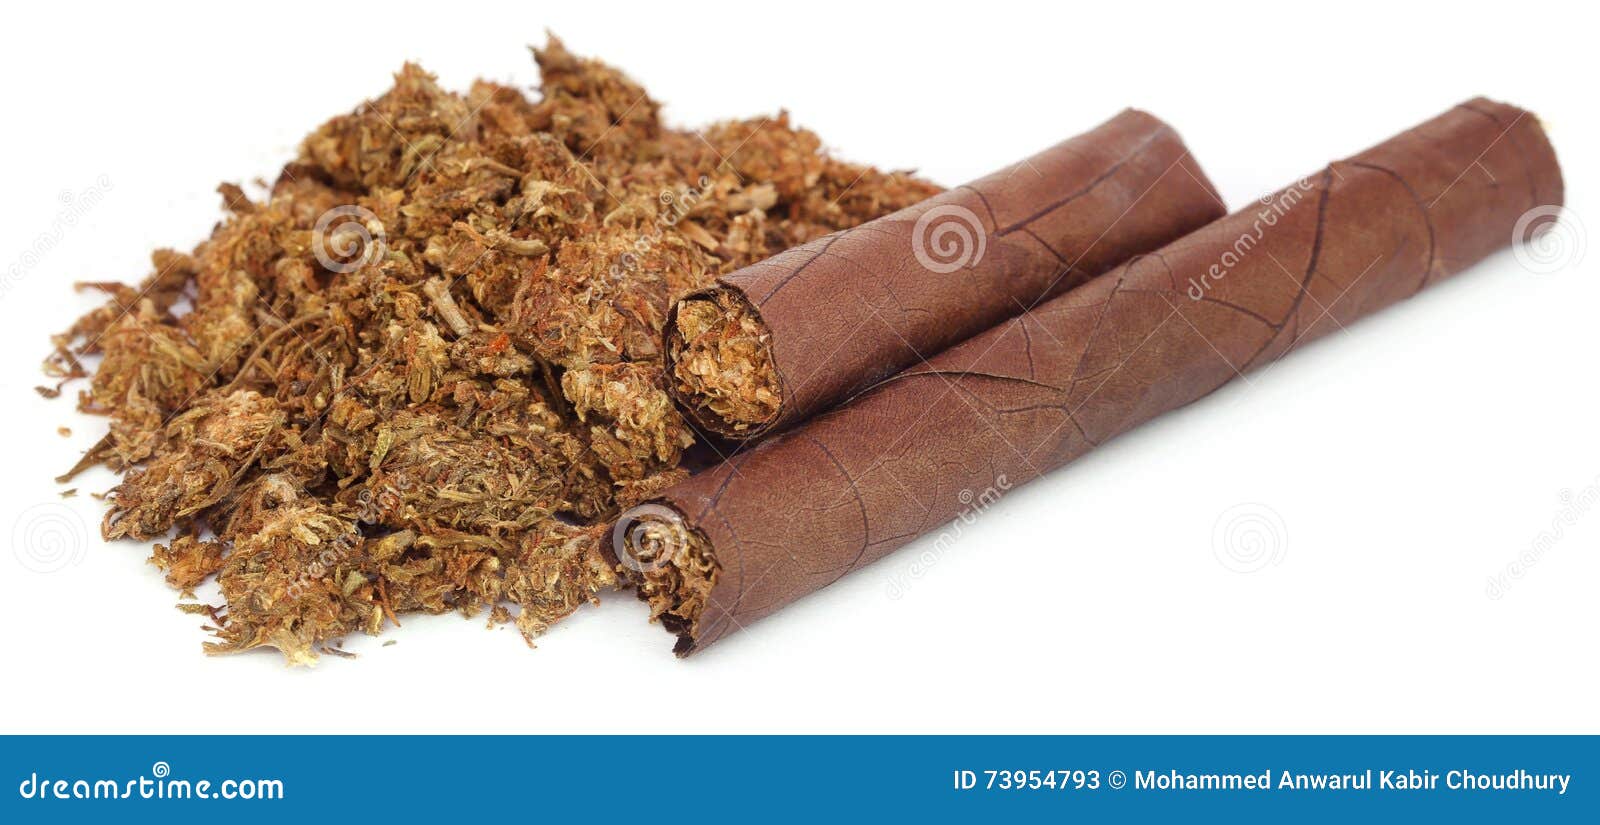 Сигара из марихуаны как травят коноплю